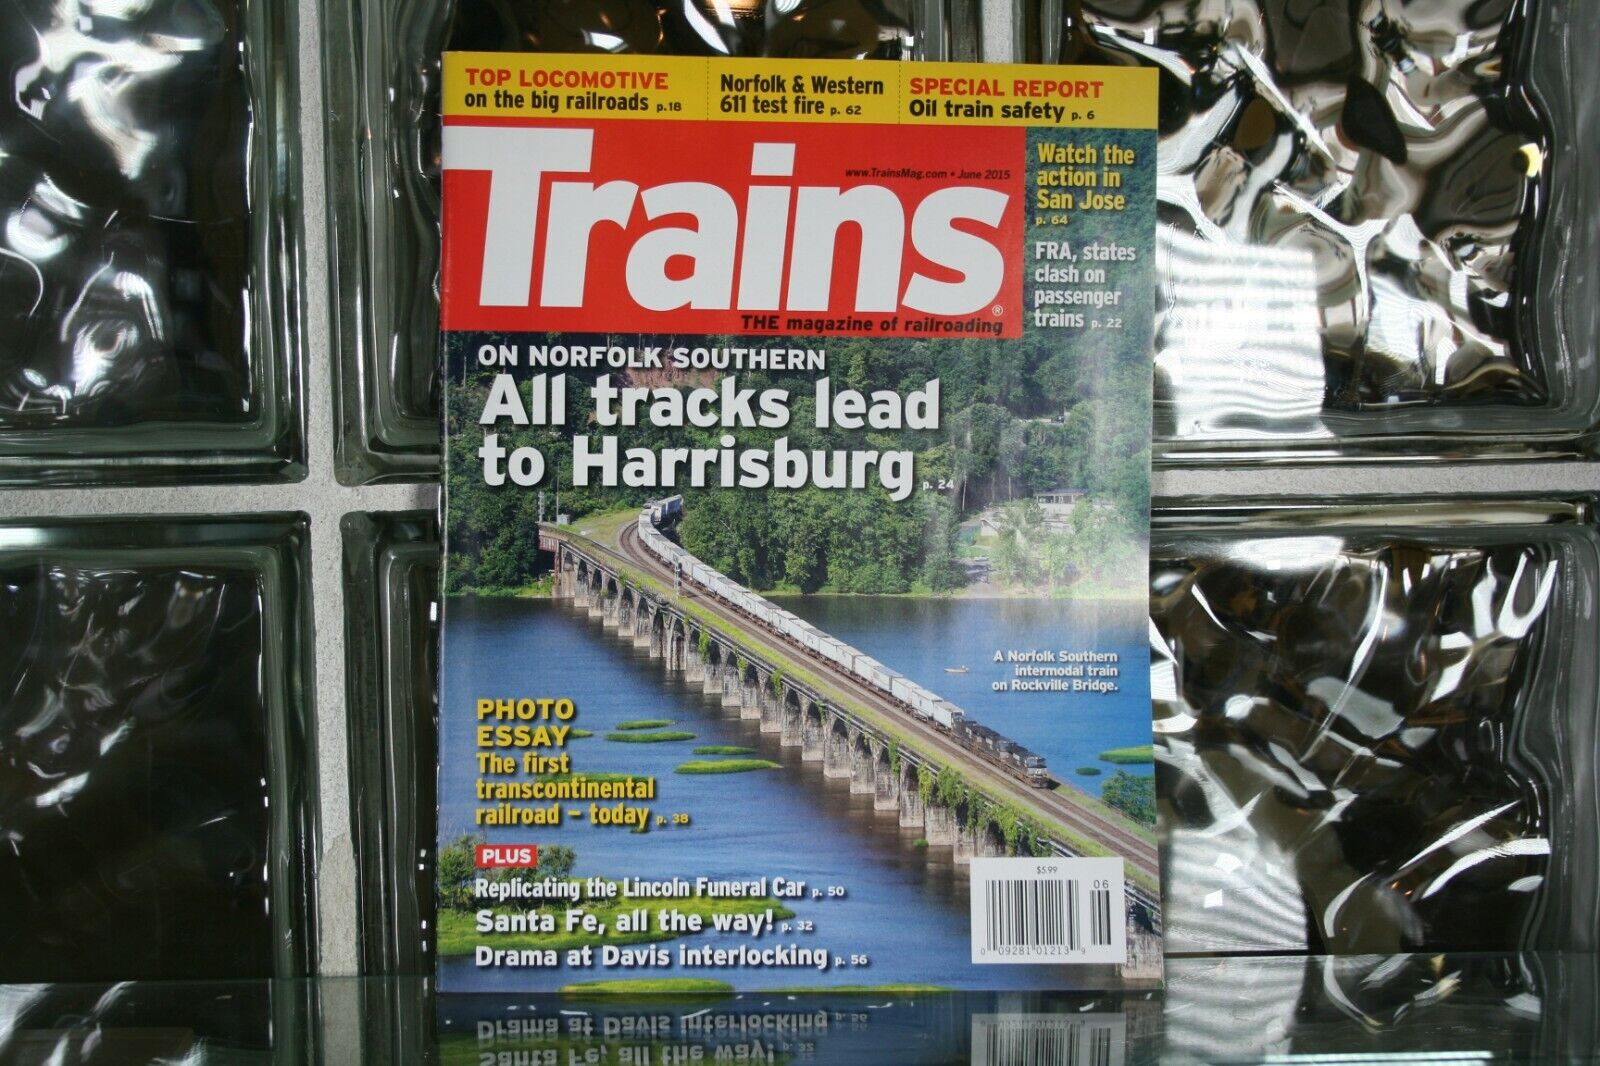 Trains Magazine June 2015 - All Tracks Lead to Harrisburg